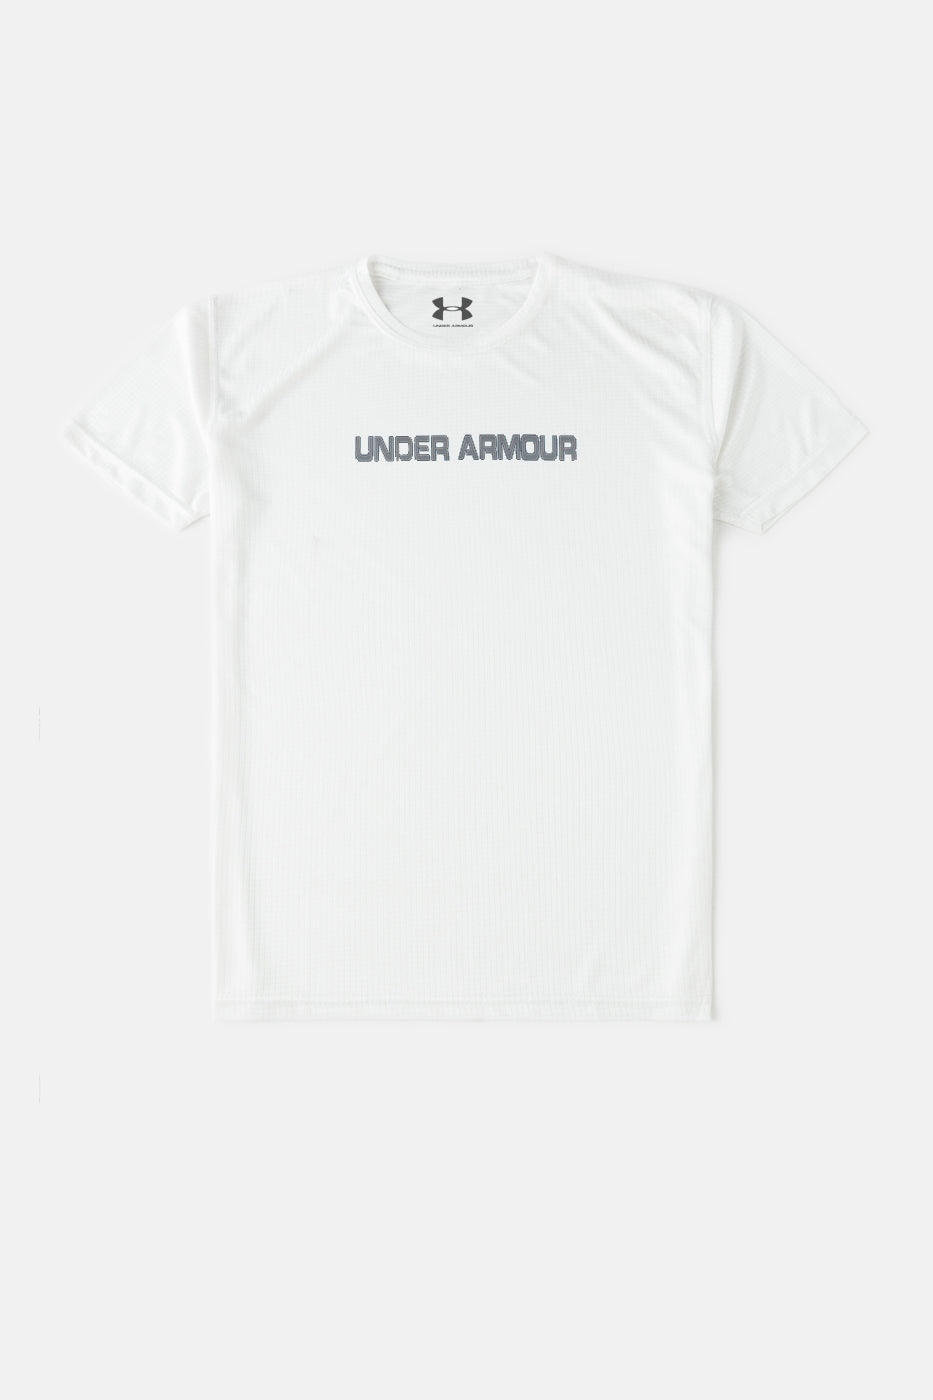 Under Armour Dri-FIT White T-Shirt